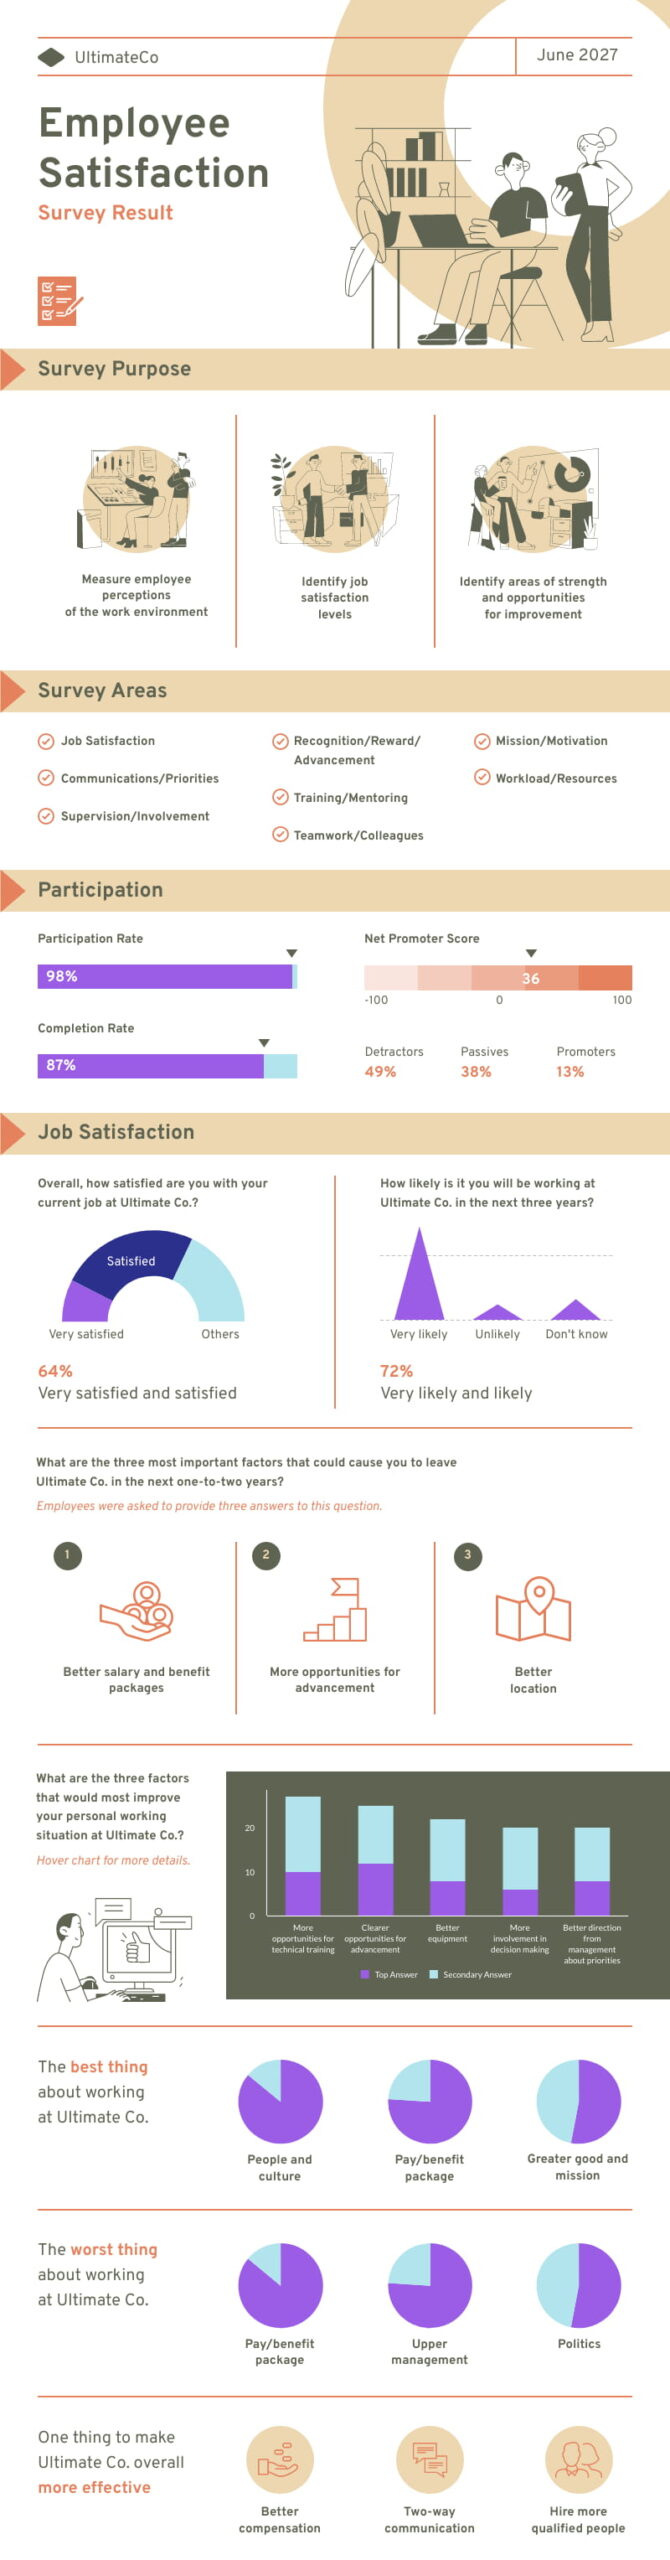 screenshot of employee satisfaction survey result